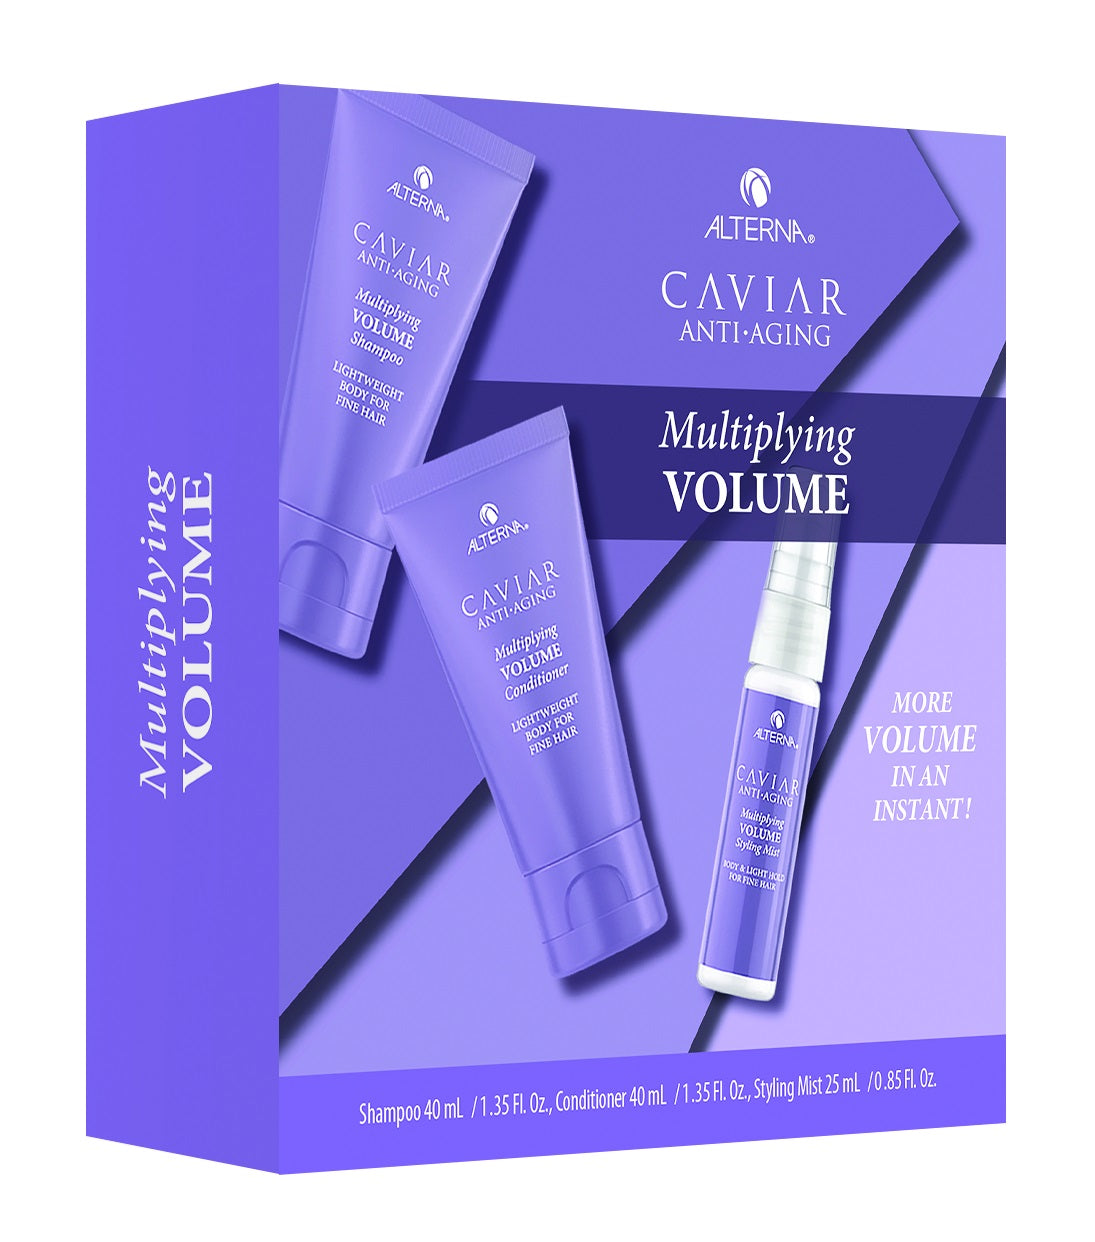 Alterna Caviar Anti-Aging Multiplying Volume Consumer Trial Kit Haarpflegeset 40 ml Shampoo + 40 ml Conditioner + 25 ml Styling Mist